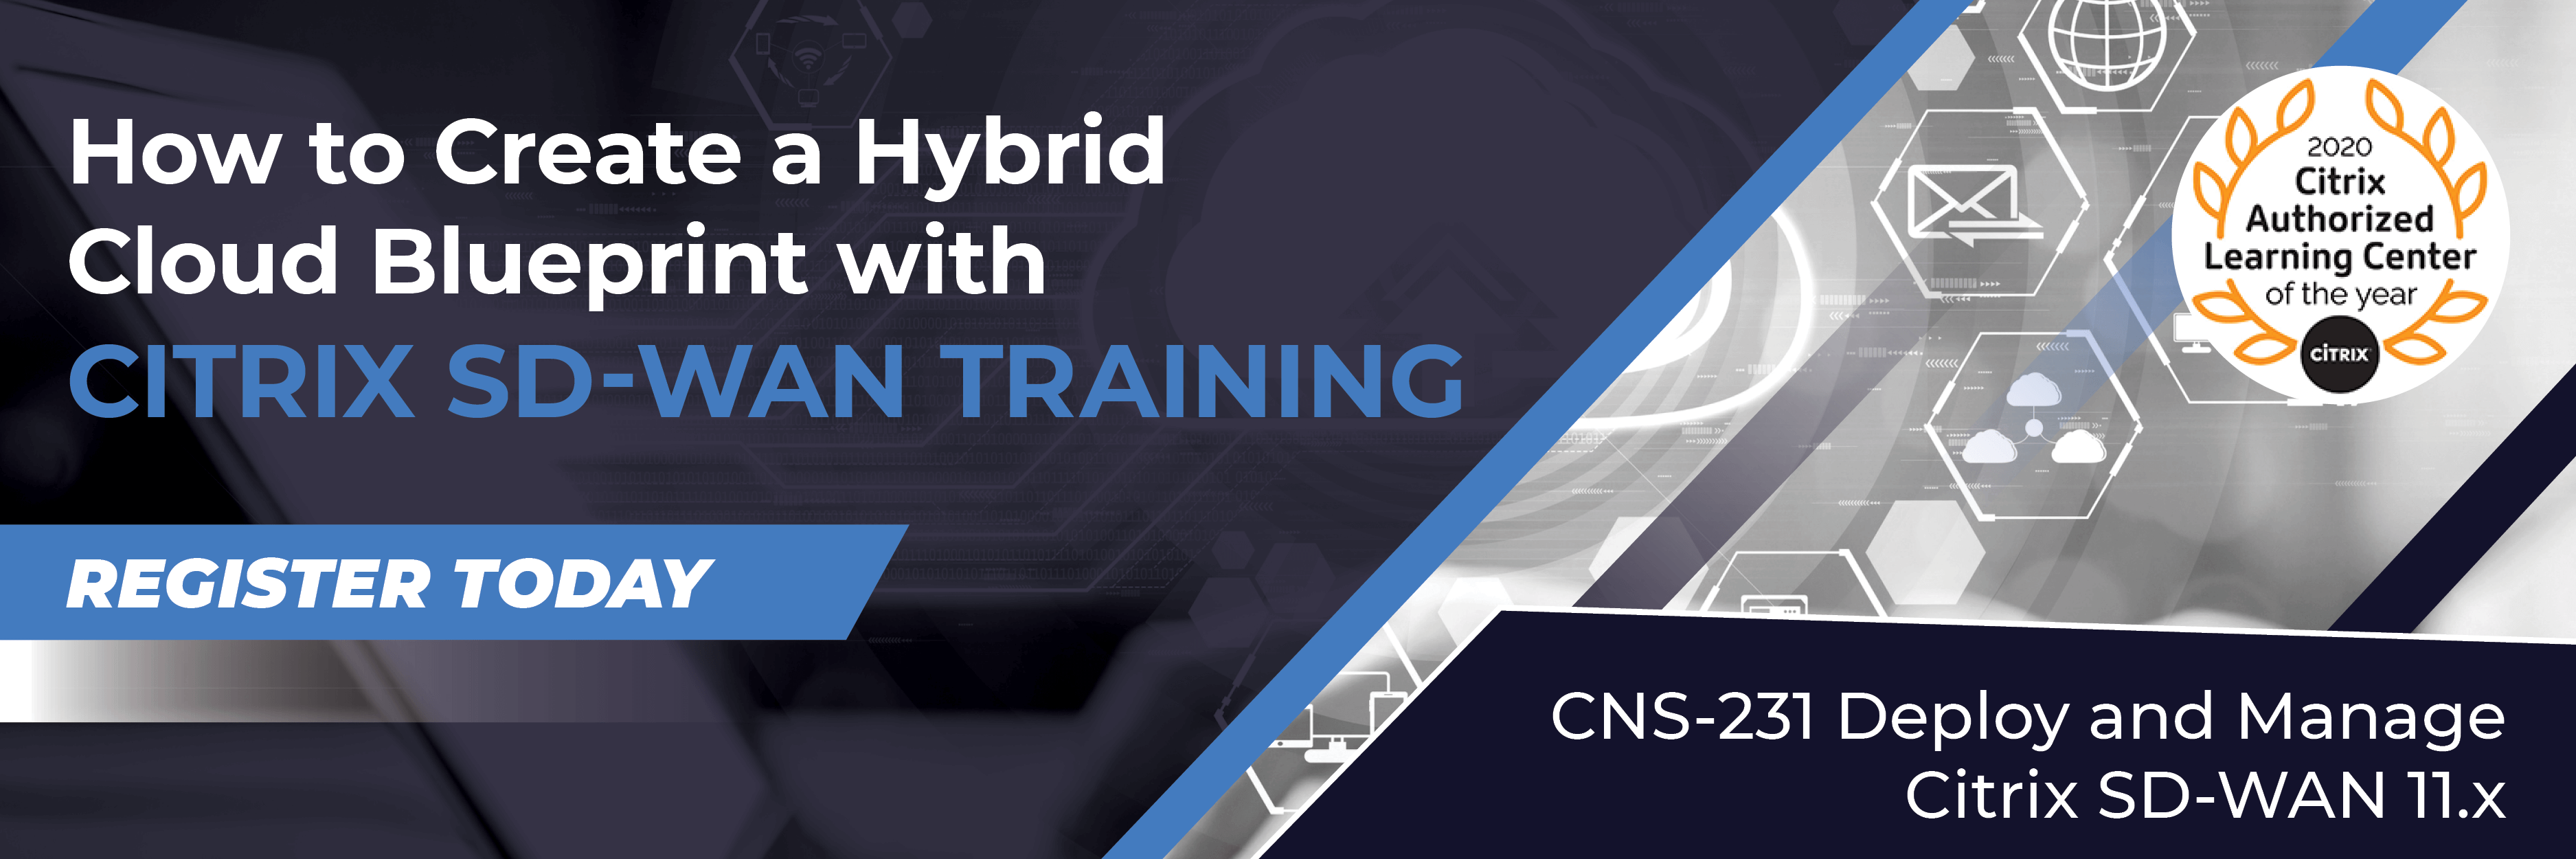 Create a Hybrid Cloud Blueprint with Citrix Training-SD-WAN